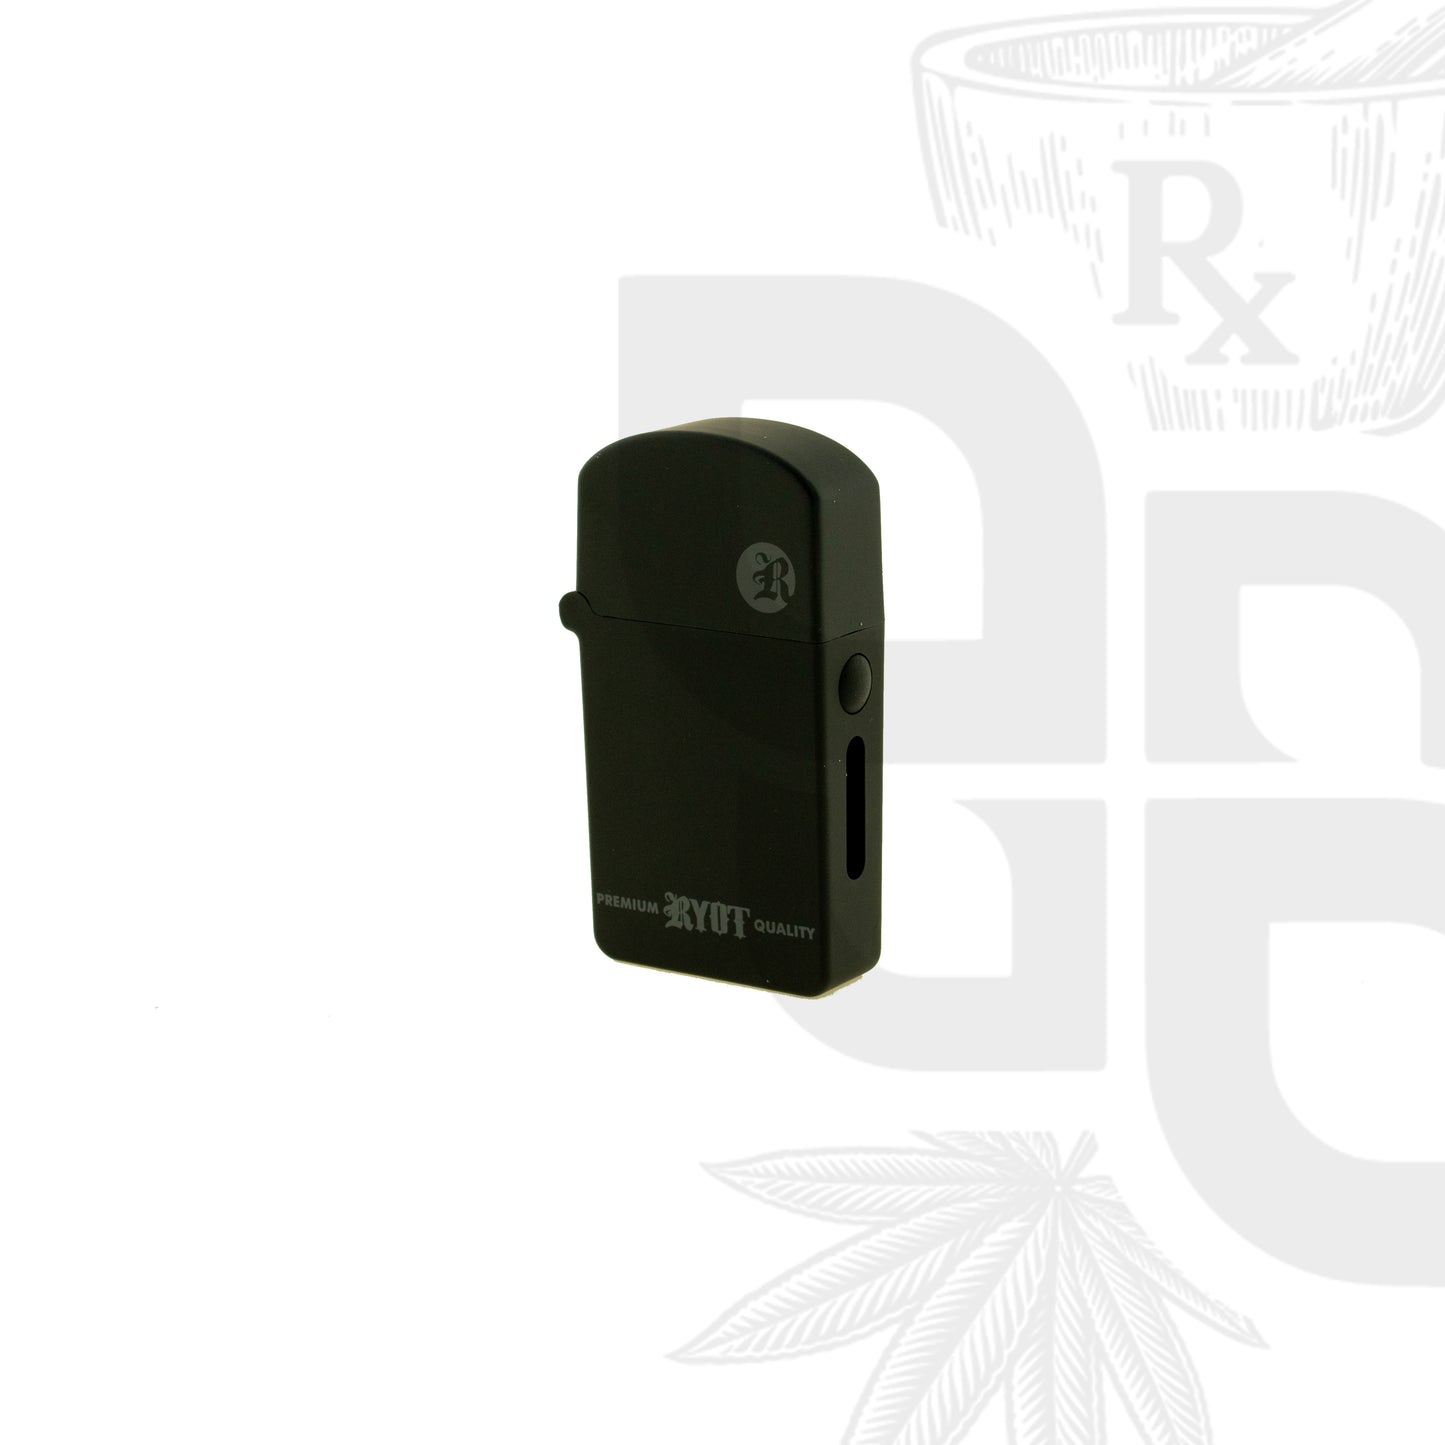 RYOT - VERB 510 Flip Battery